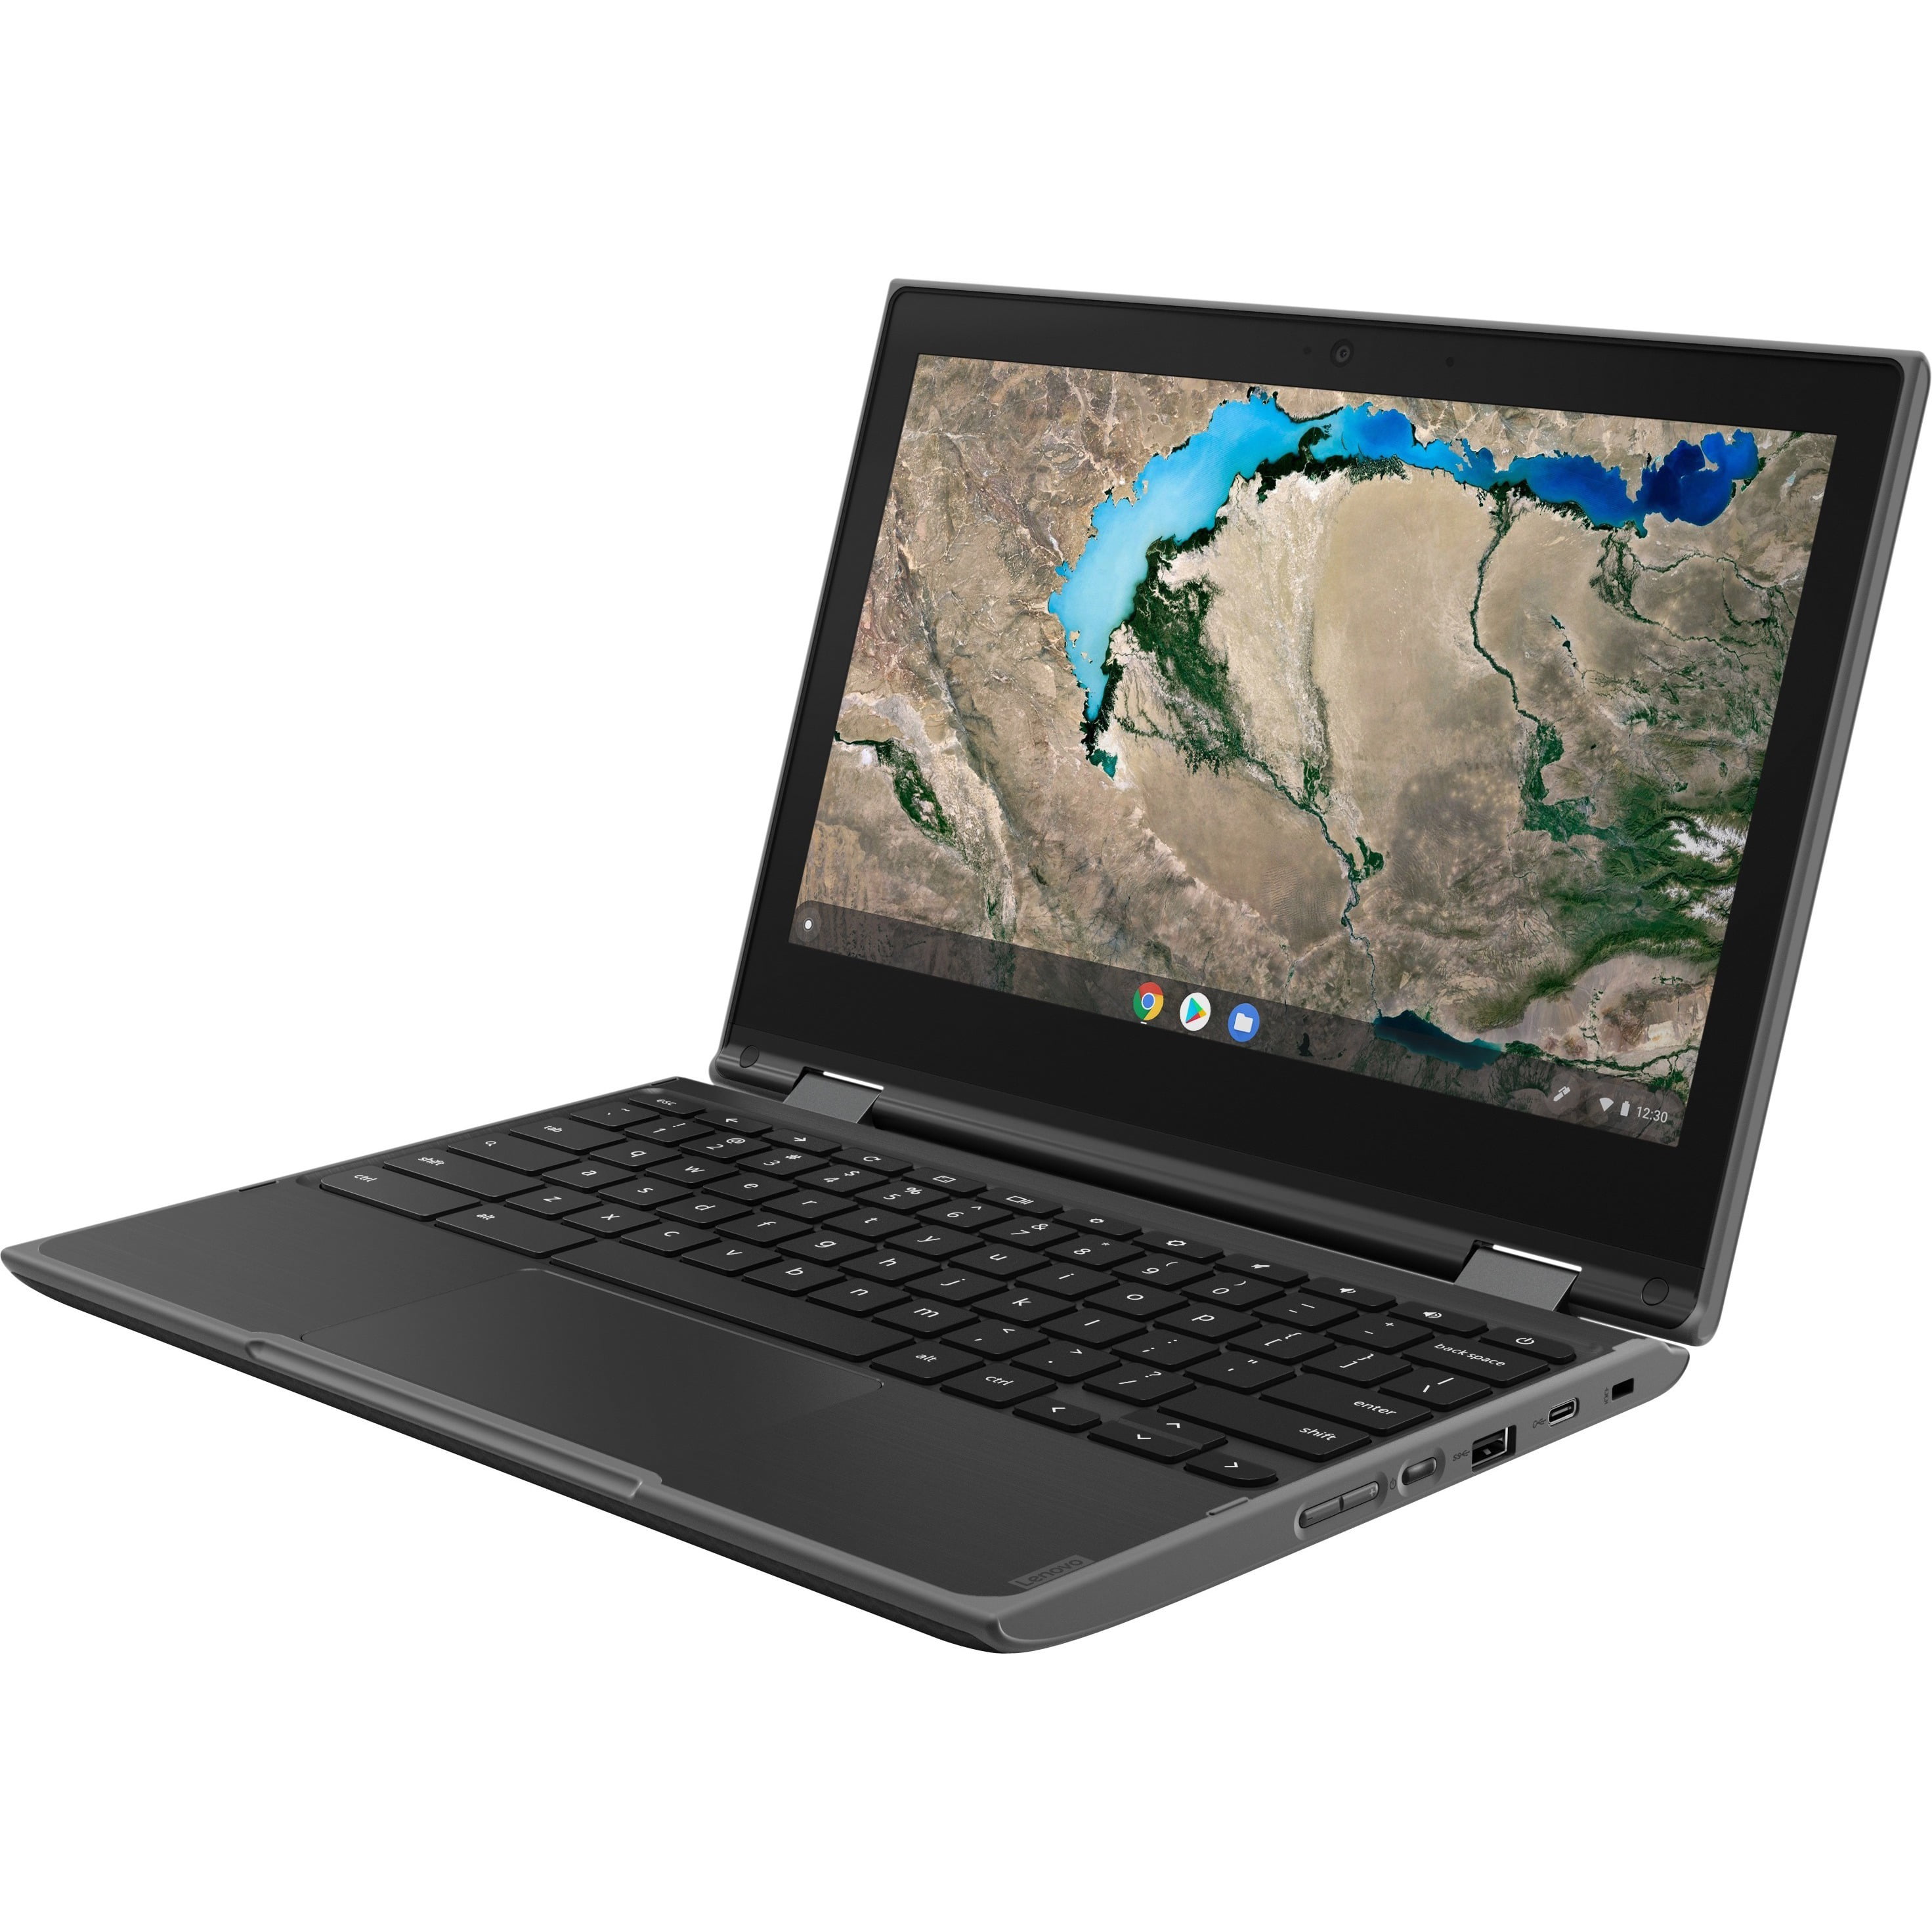 Lenovo 300e 11.6" Touchscreen 2-in-1 Notebook - Intel N4000 4GB RAM 64GB eMMC - Windows 10